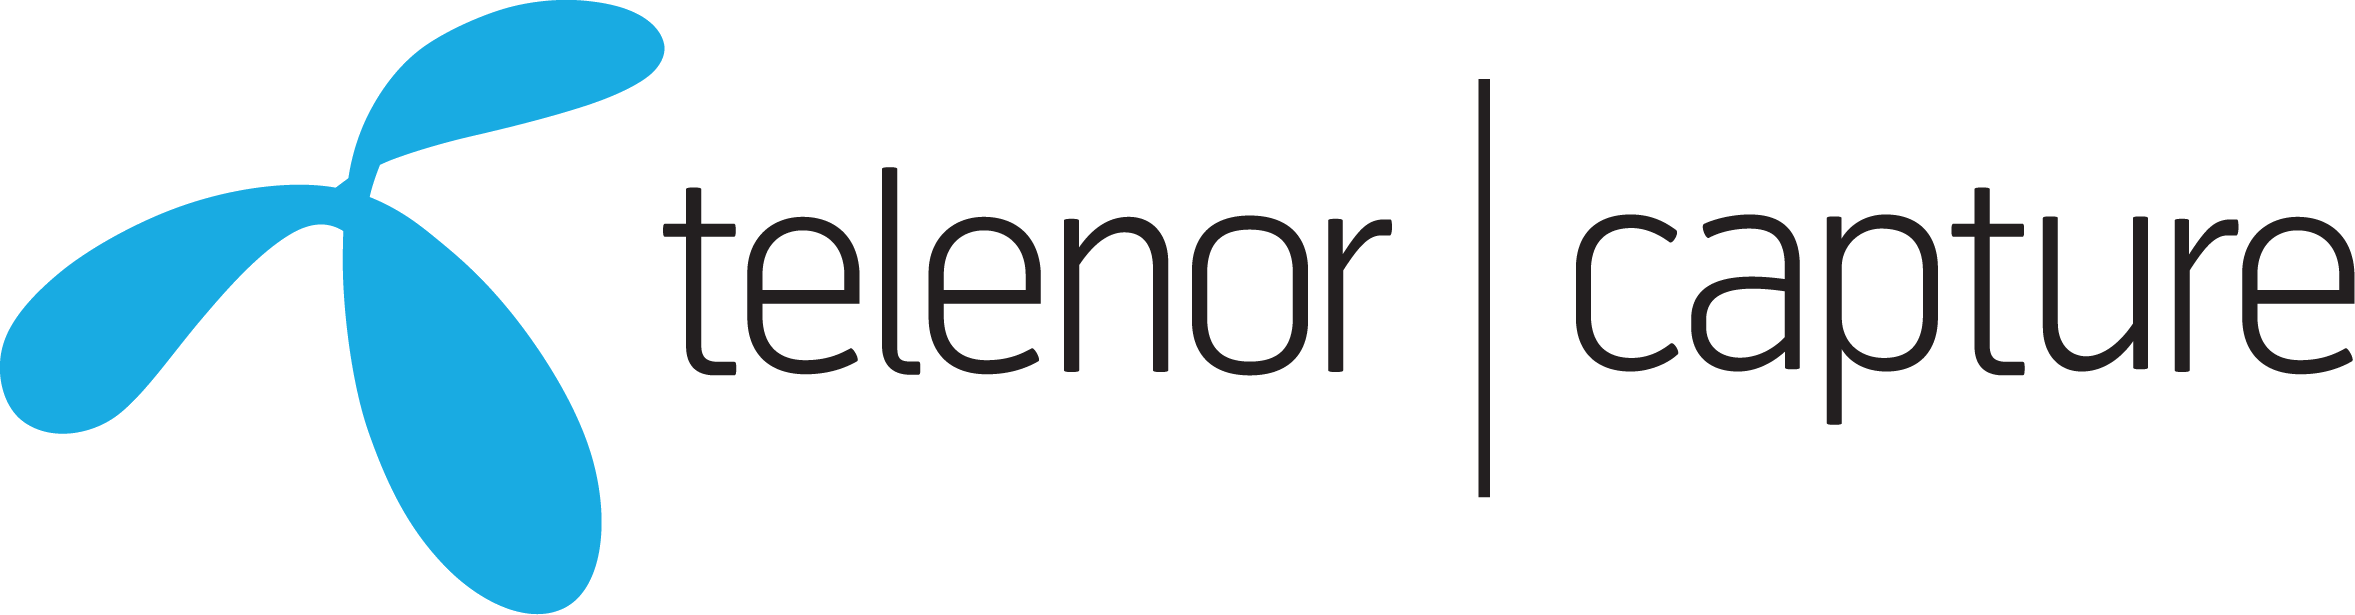 Telenor Capture logo